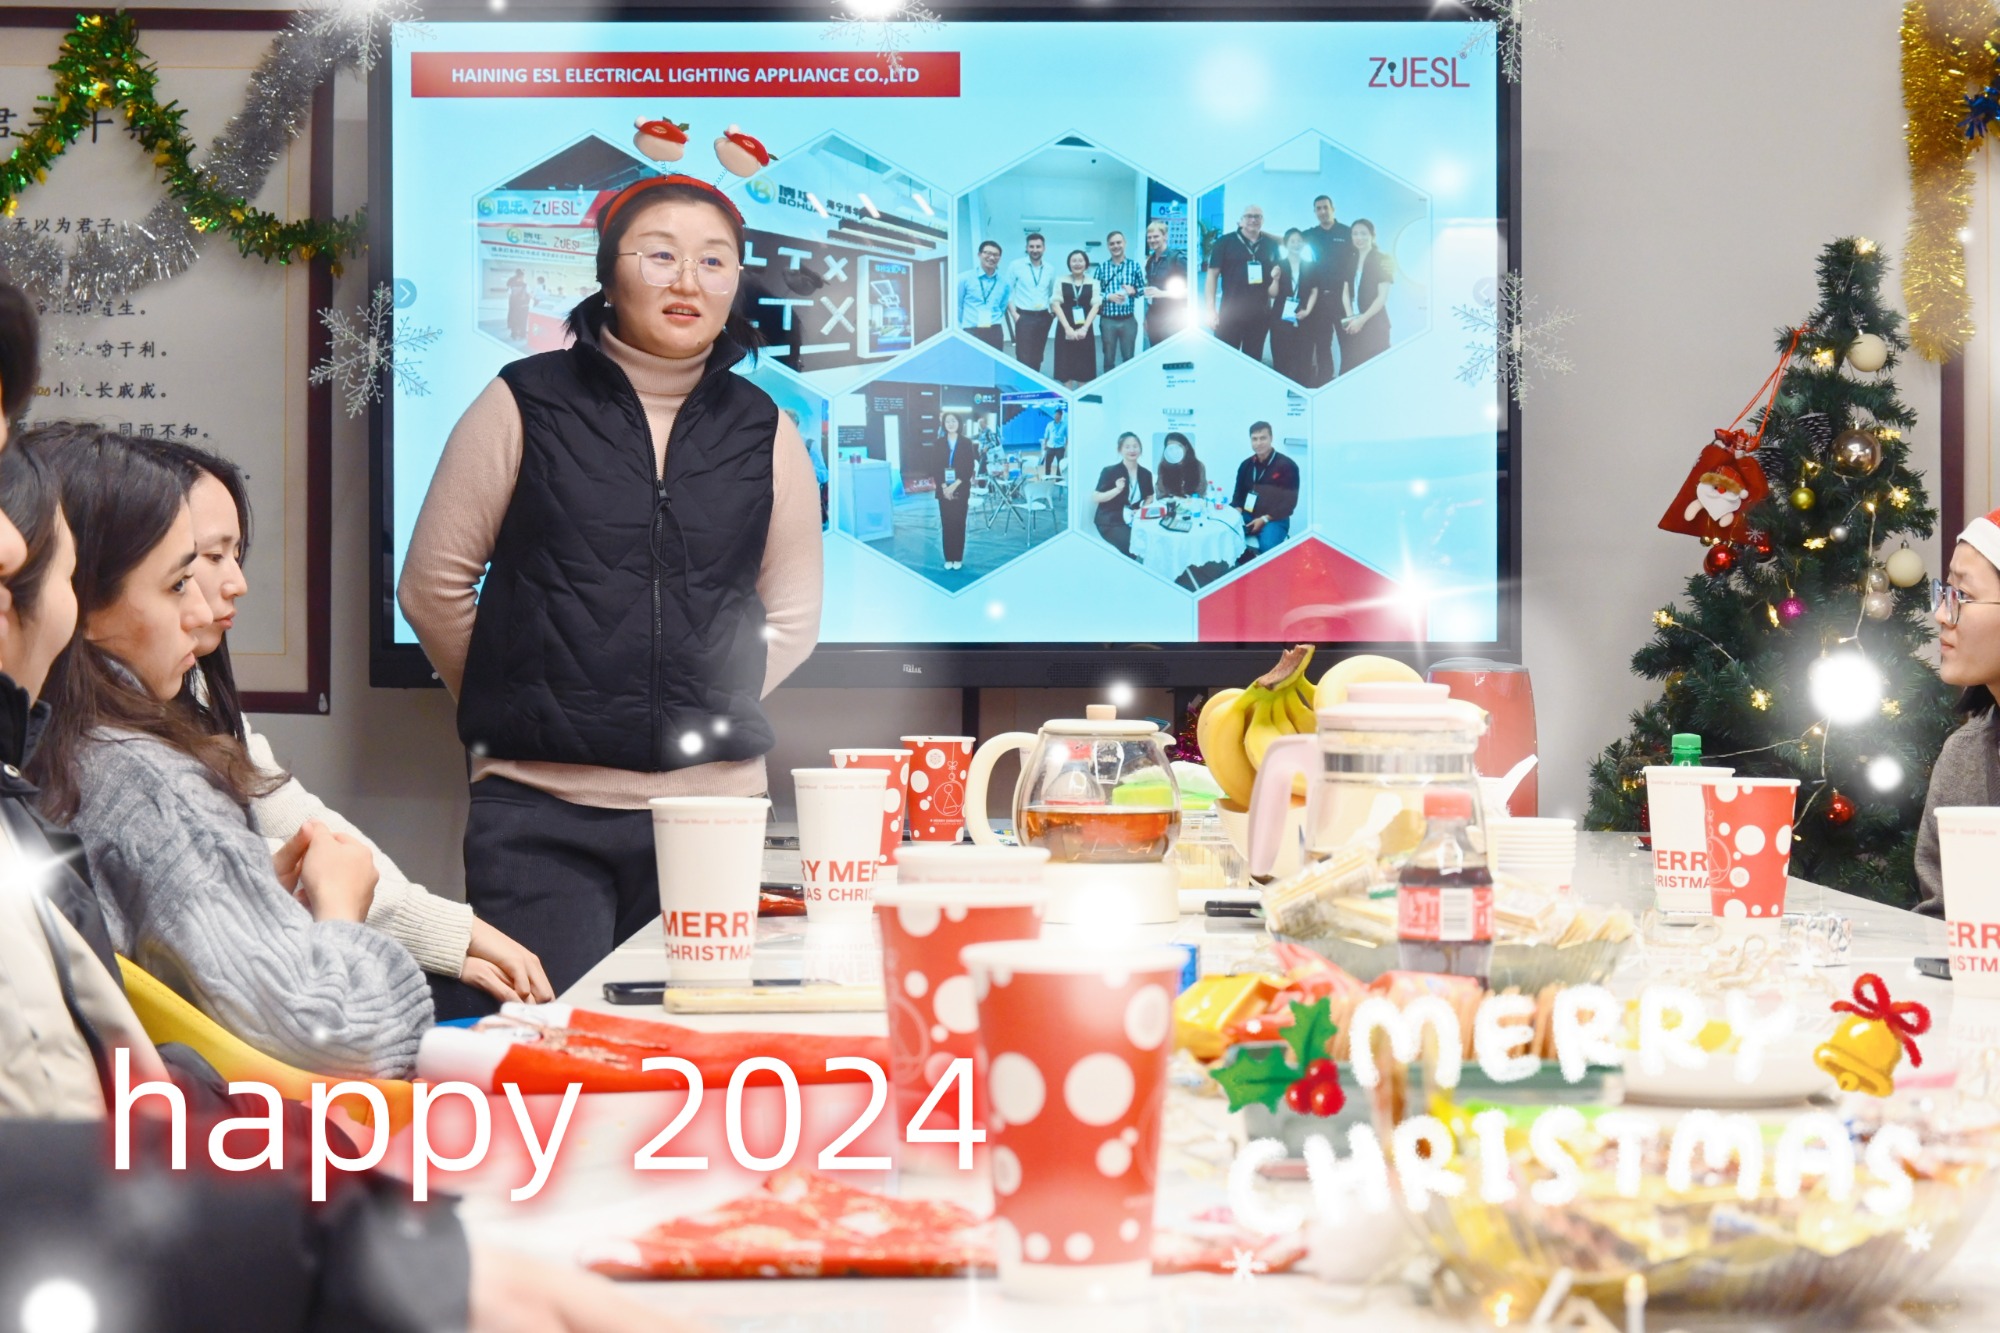 My dear friend ZJESL wish you have a nice new year 2024!